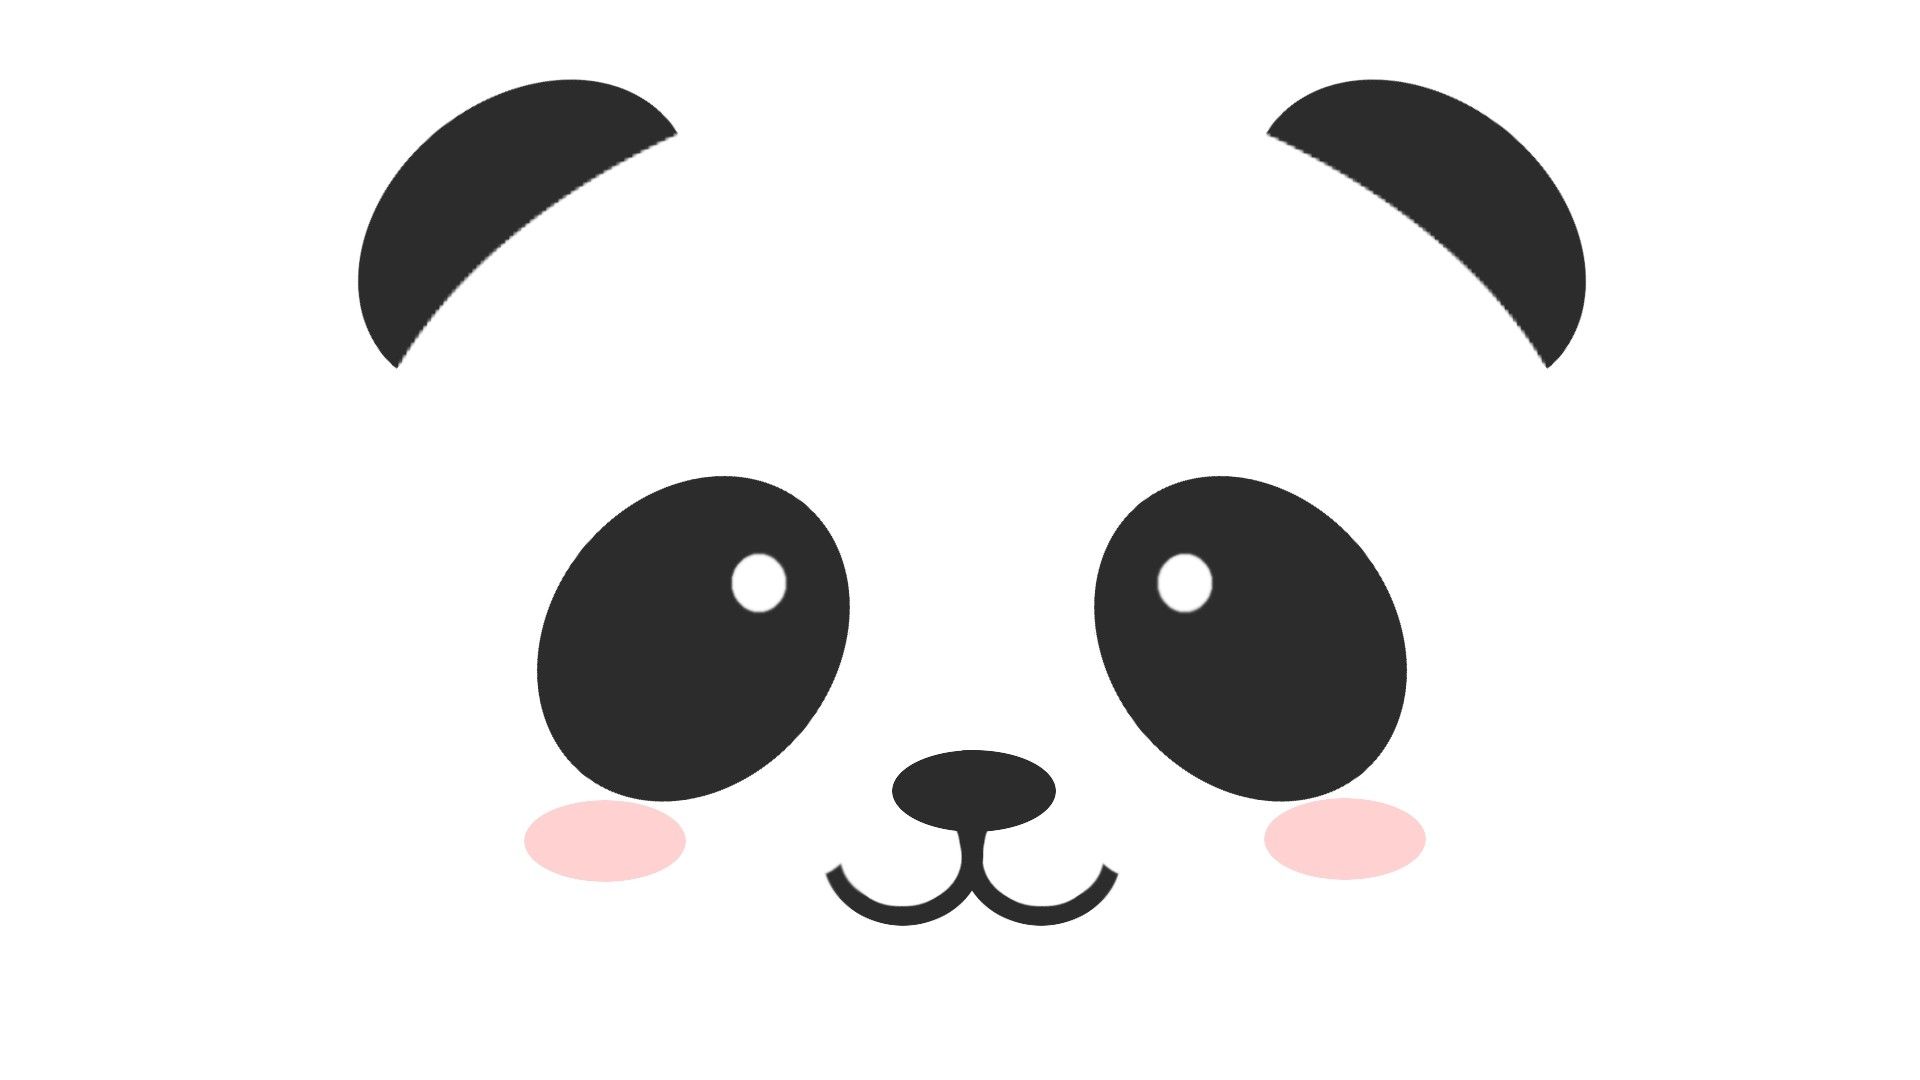 Panda wallpapers hd free download x cute wallpapers for puter panda wallpapers cute panda wallpaper